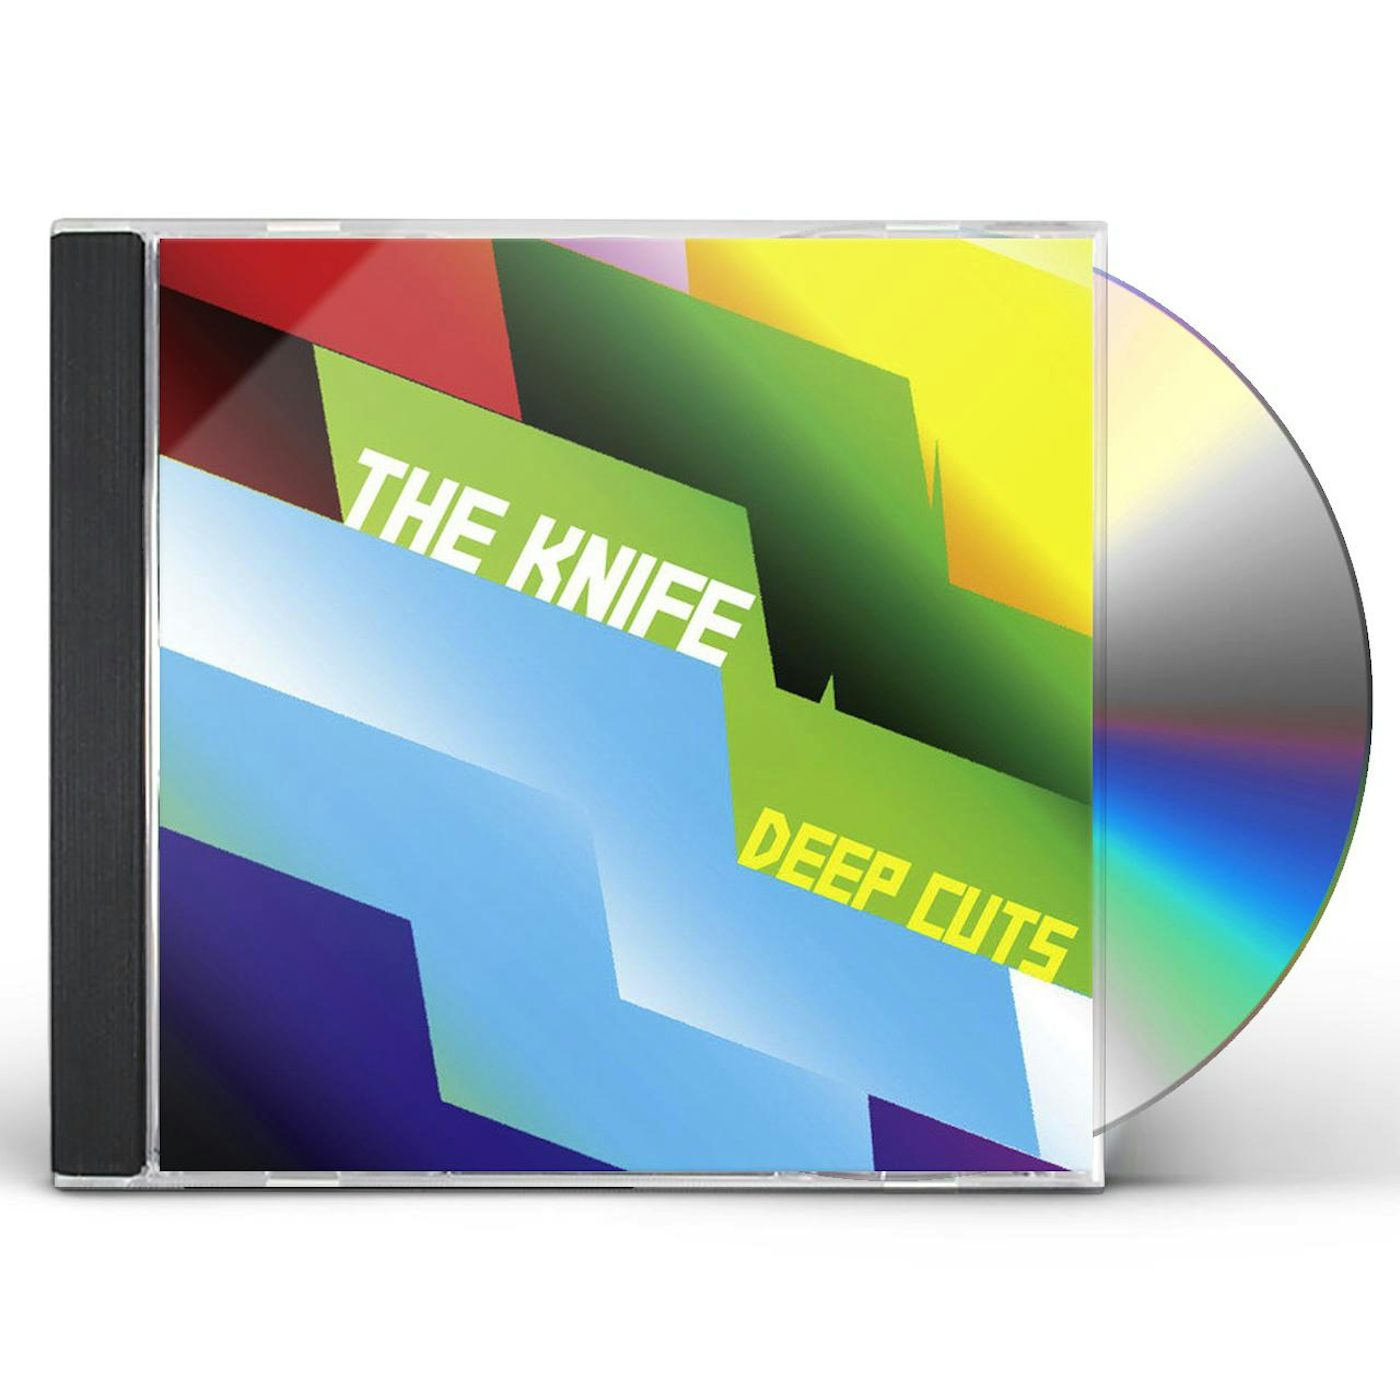 The DEEP CUTS CD